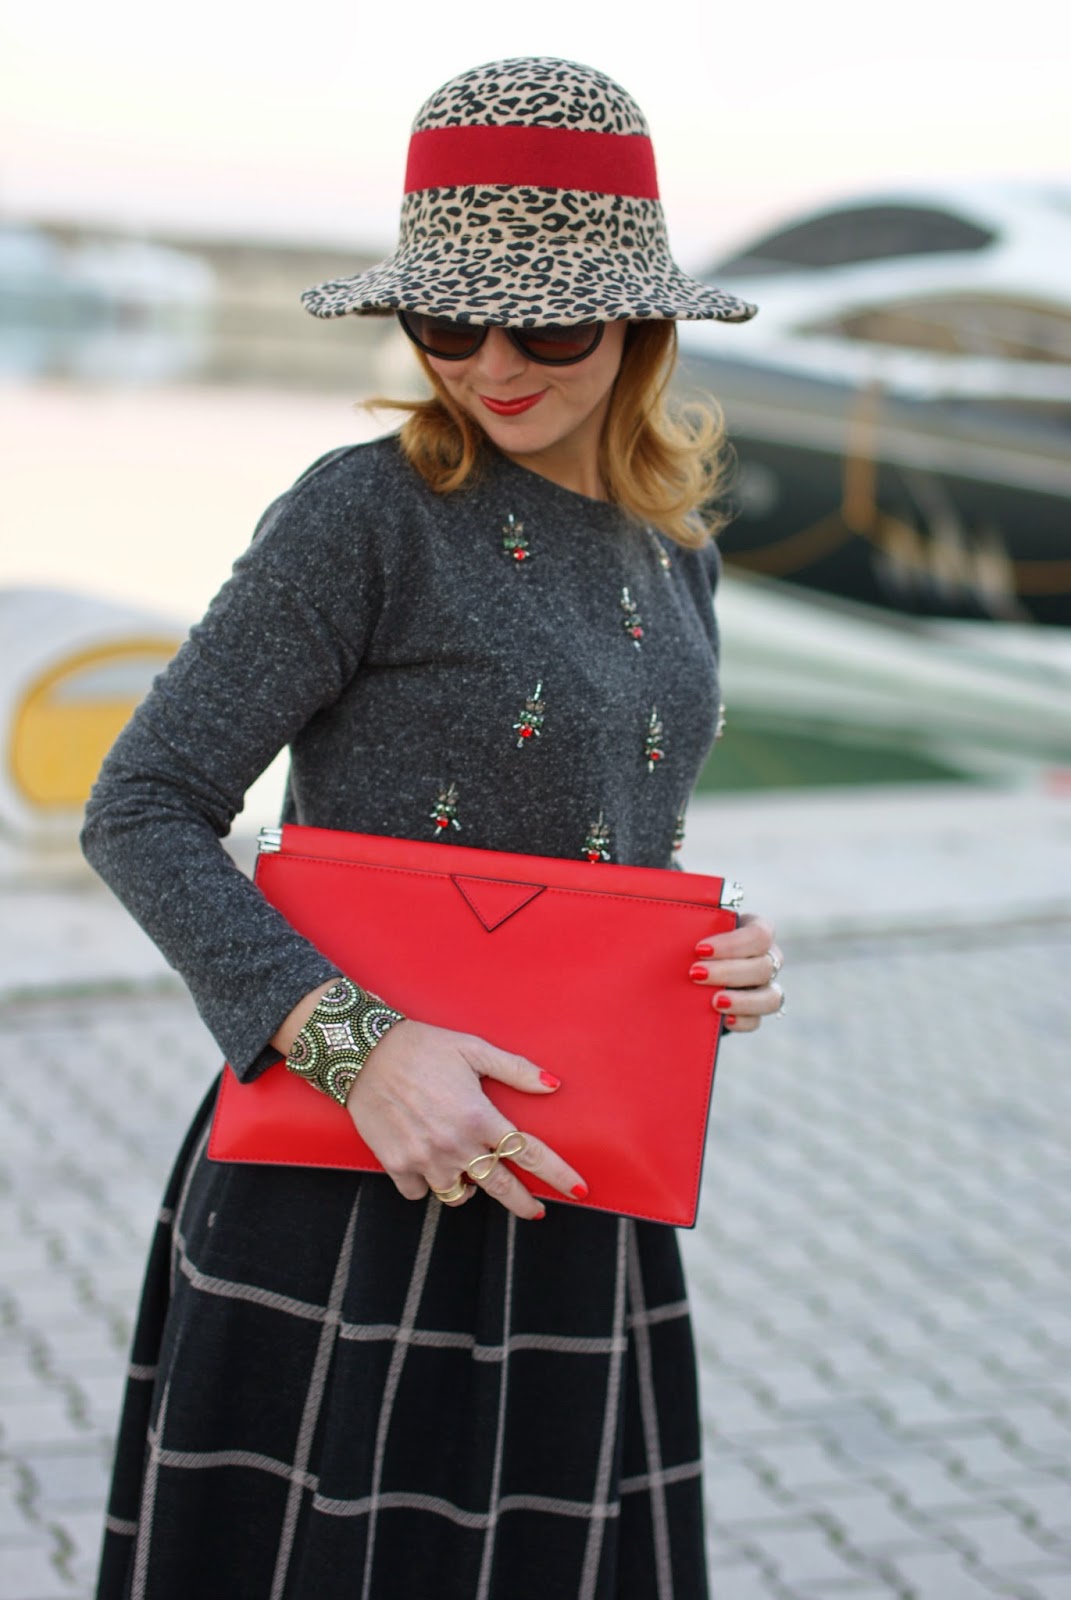 rhinestones sweatshirt, check midi skirt, red clutch, Fashion and Cookies, fashion blogger